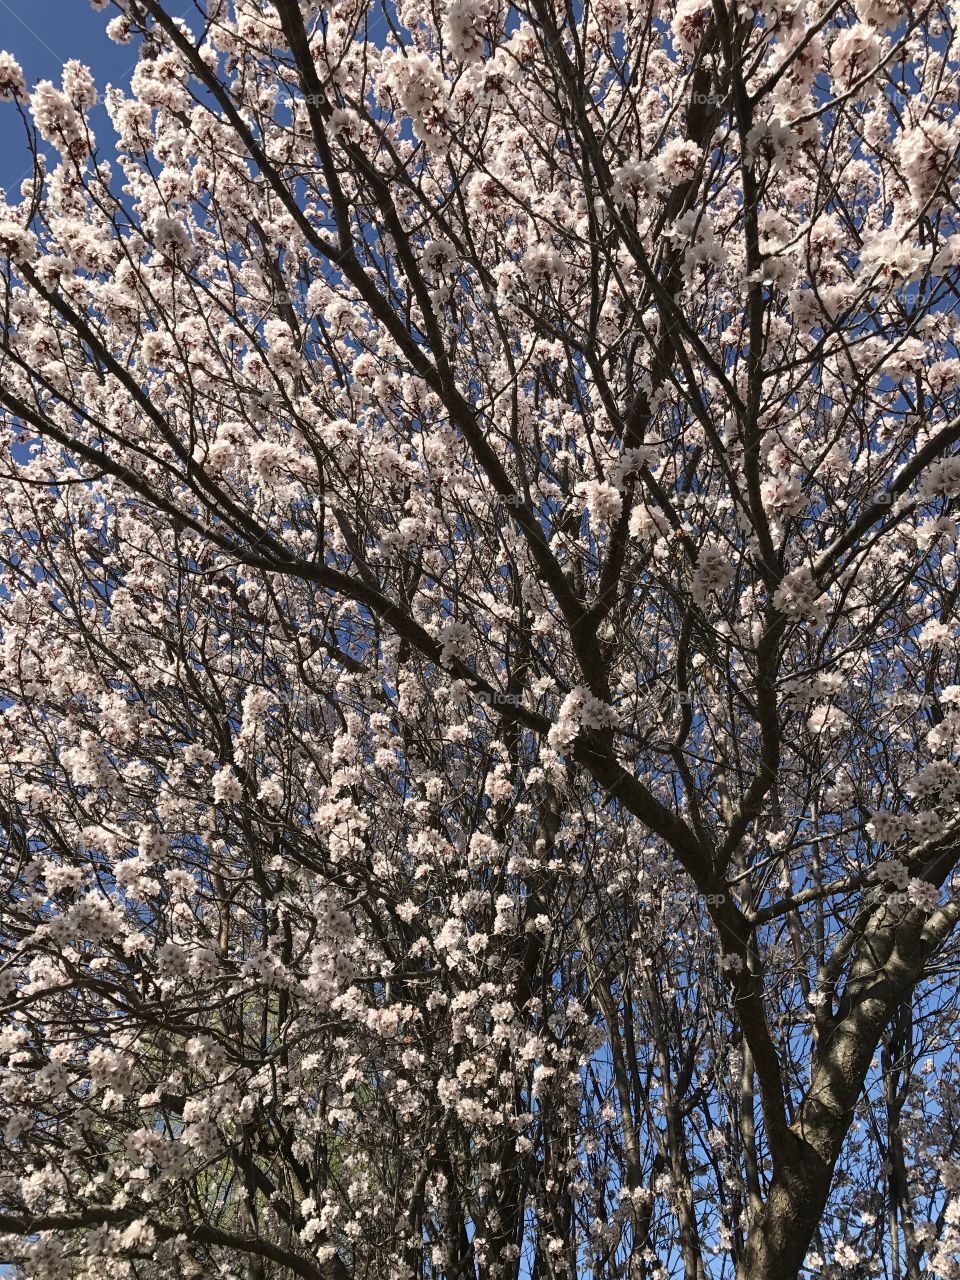 Tree blooms